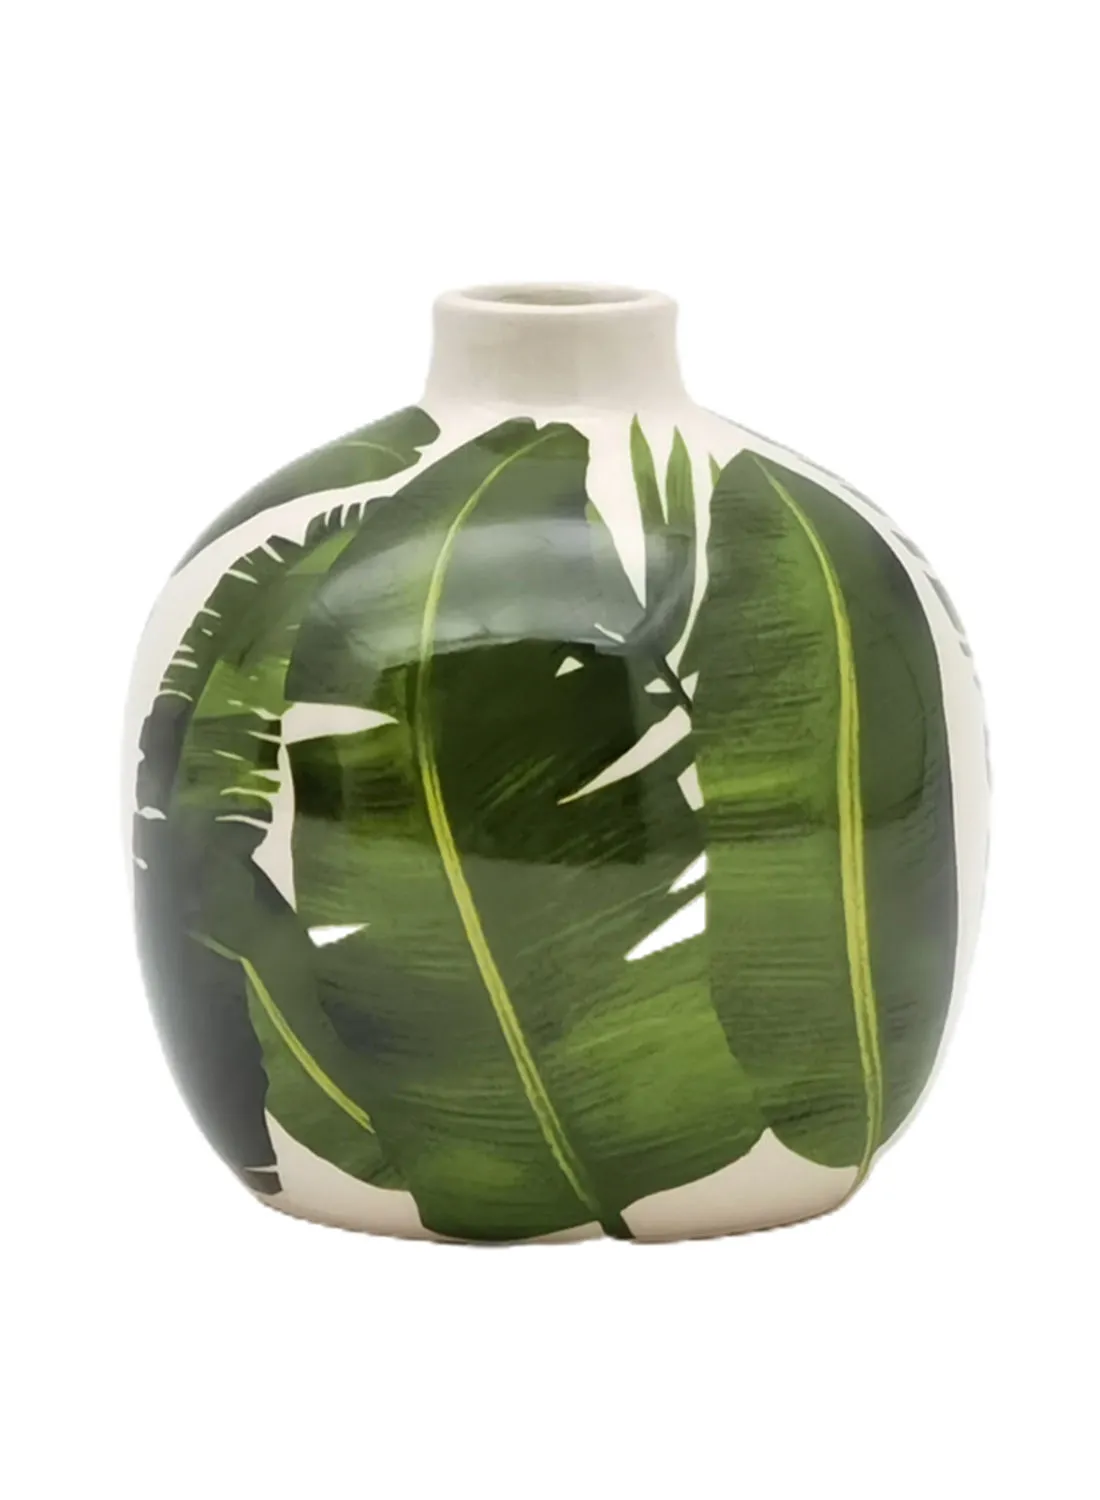 ebb & flow Elegant Design Ceramic Vase Unique Luxury Quality Material For The Perfect Stylish Home N13-015 Green 15.5 x 16cm